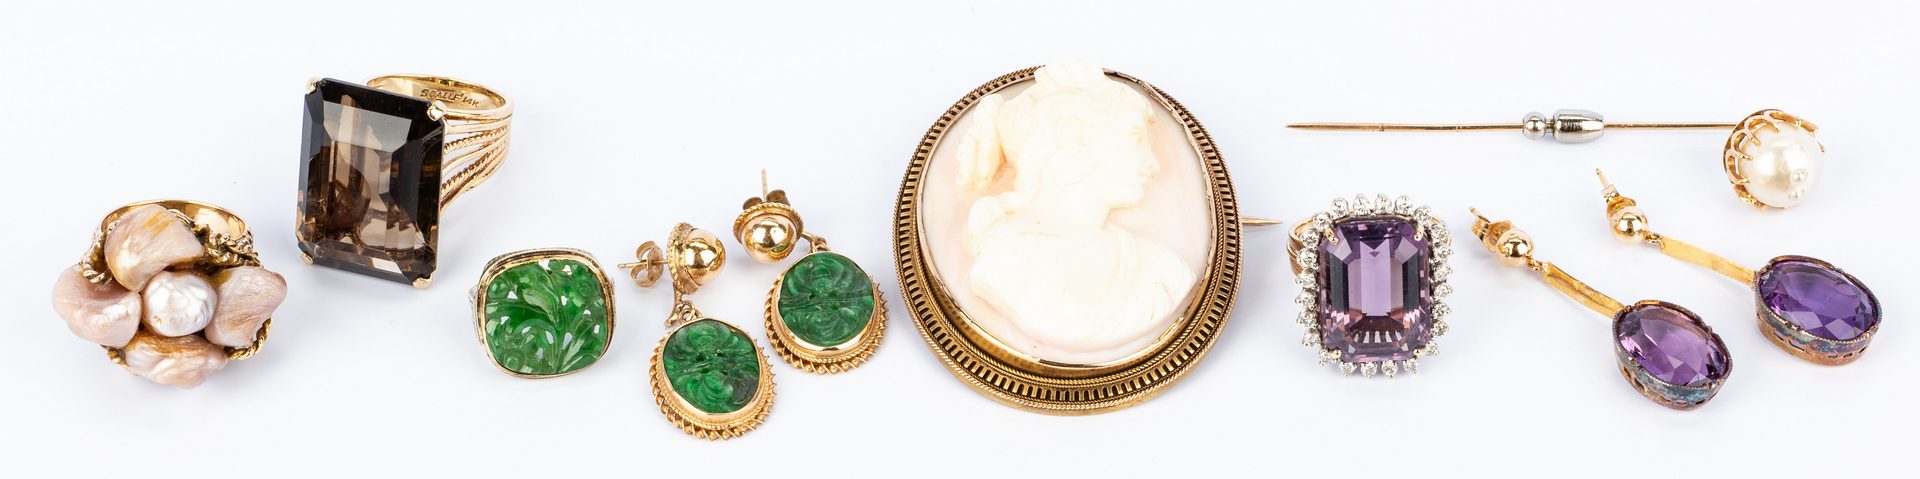 Lot 144: 8 Gold and Semi-precious Jewelry Items